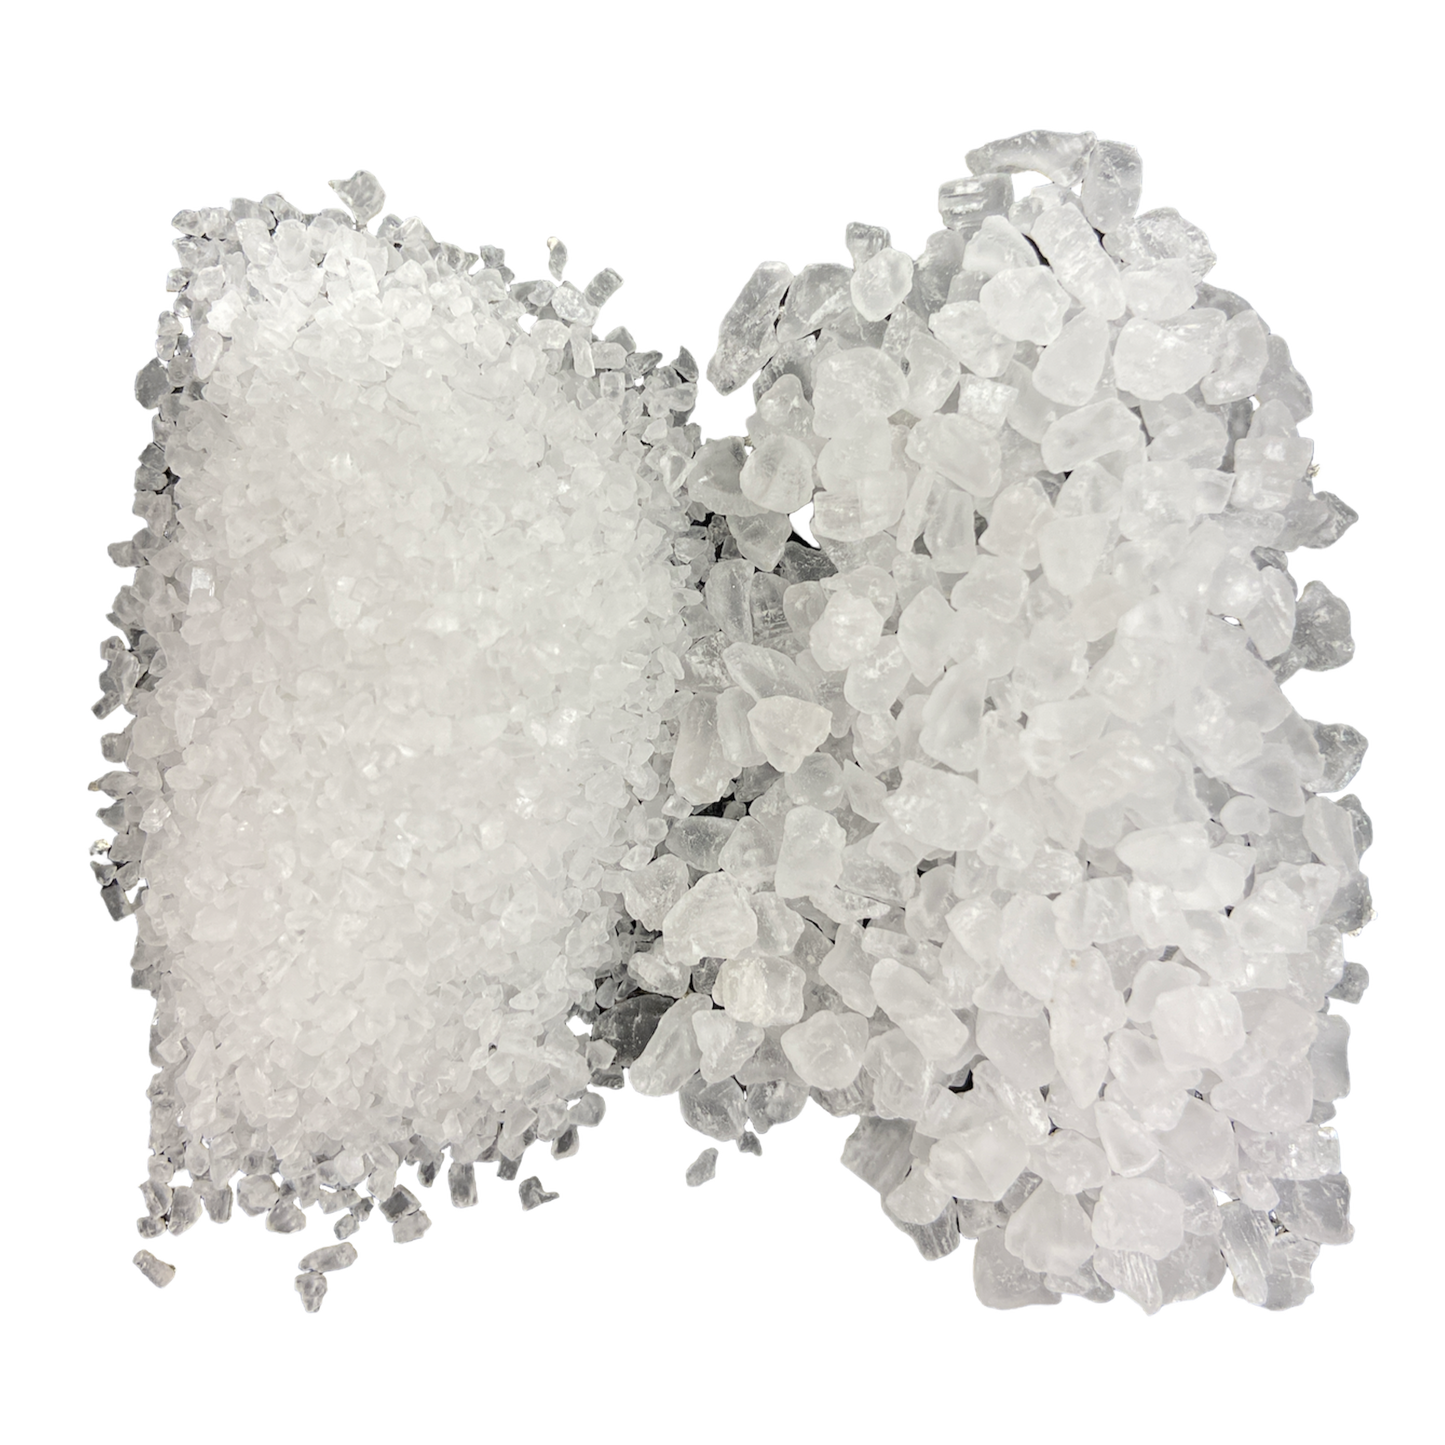 Pure Ocean Sea Salt Coarse and Fine grains